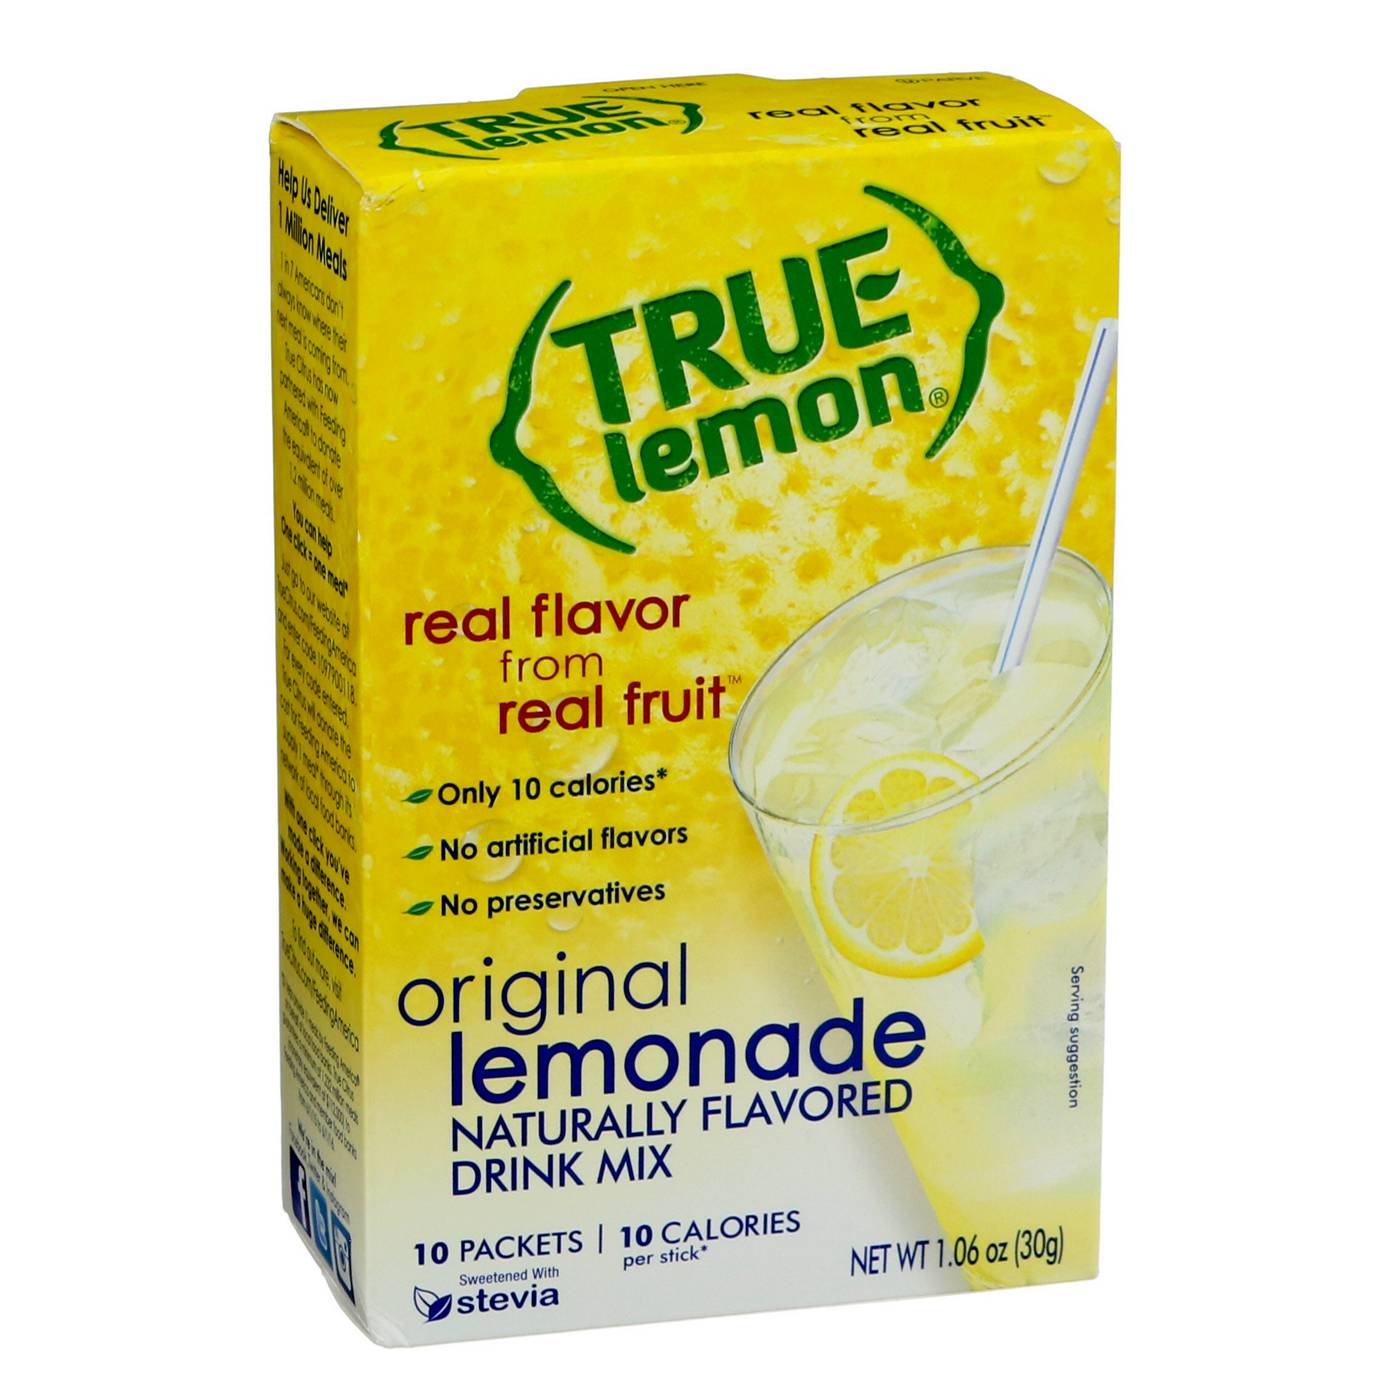 True Lemon Original Lemonade Drink Mix; image 1 of 2